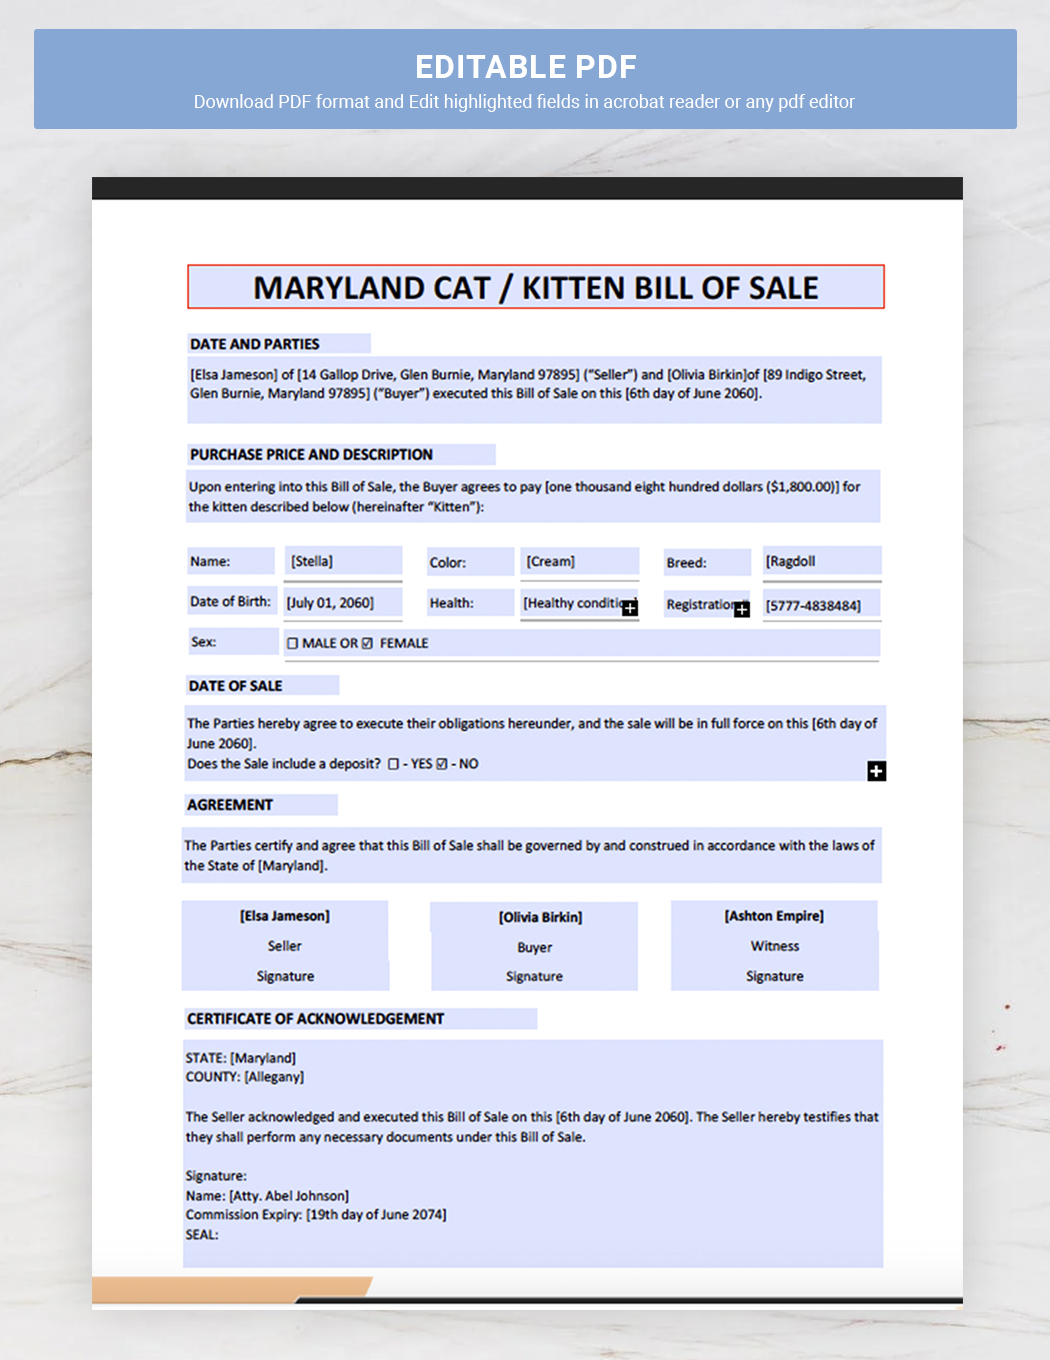 Maryland Cat / Kitten Bill of Sale Form Template